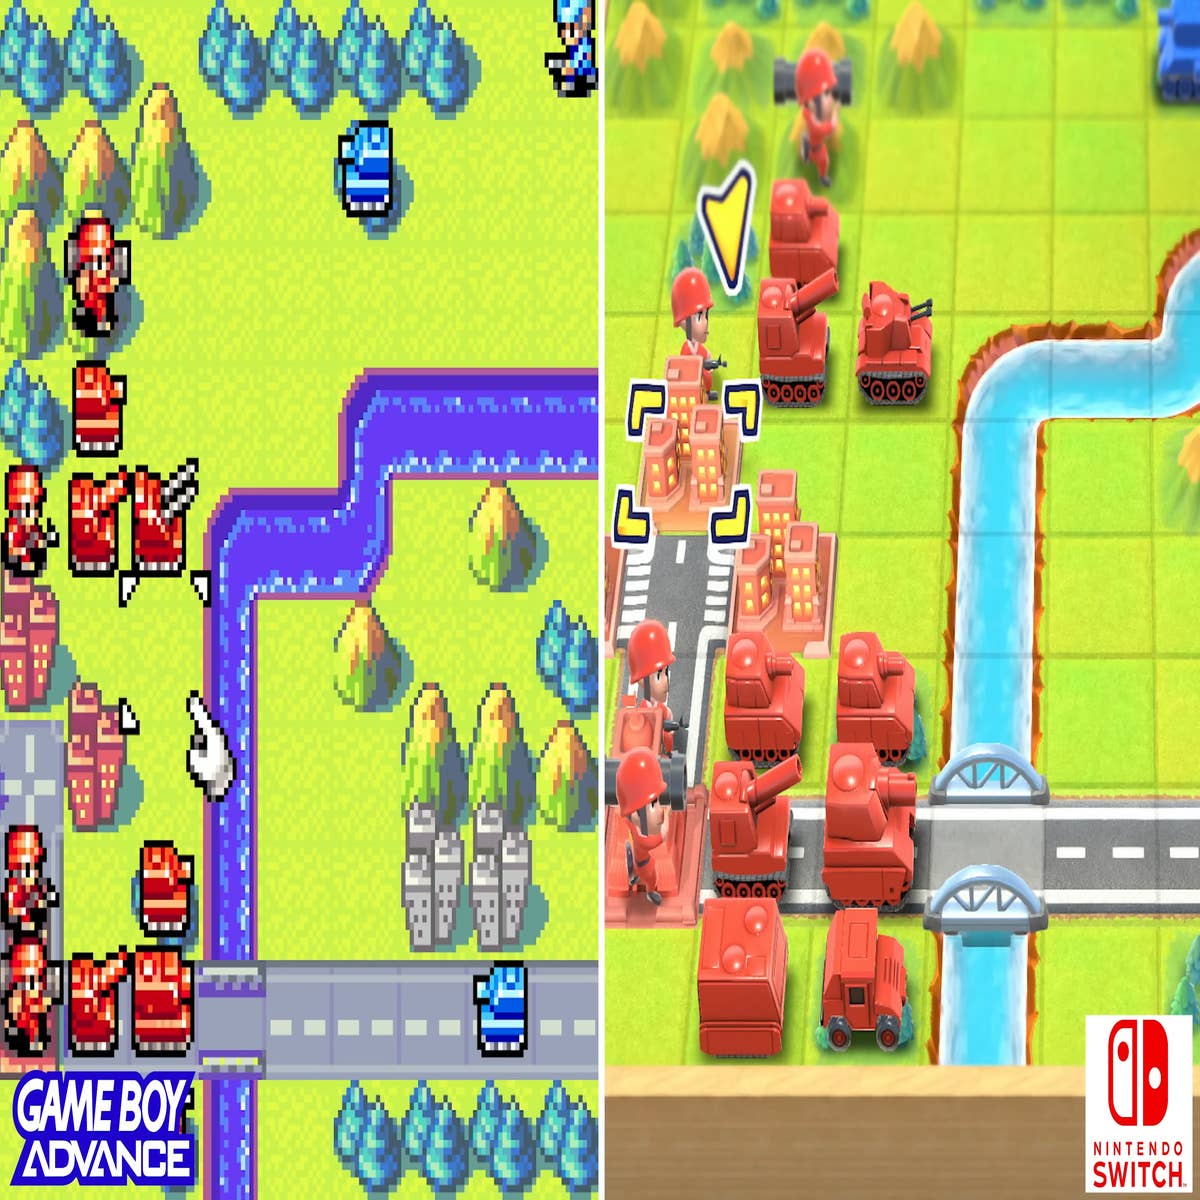 Advance Wars Game Boy Advance Review – Games That I Play